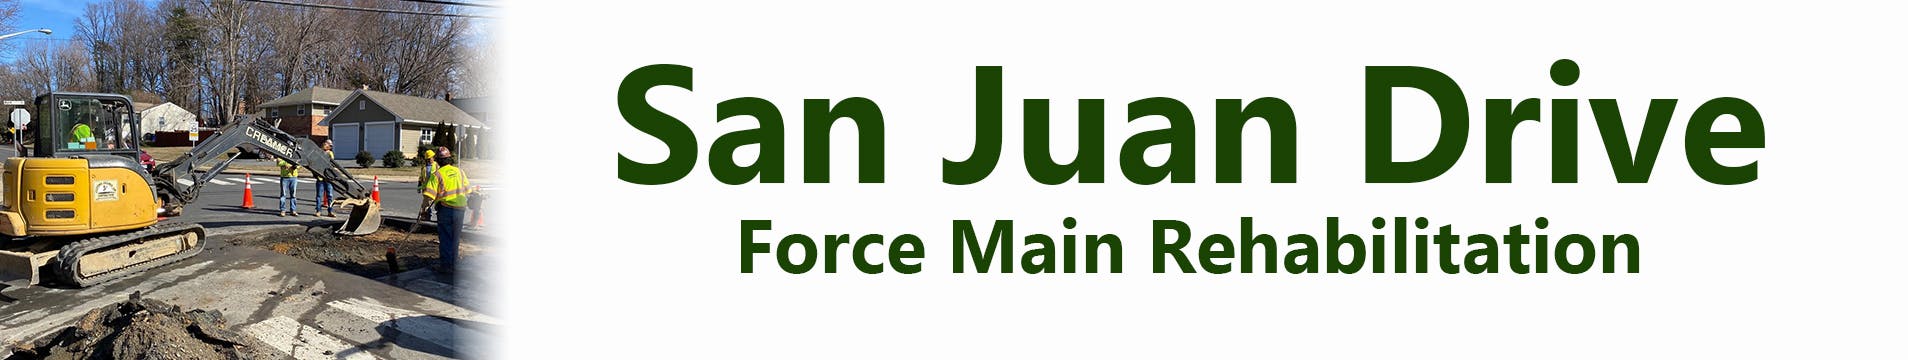 San Juan Drive Force Main Rehabilitation